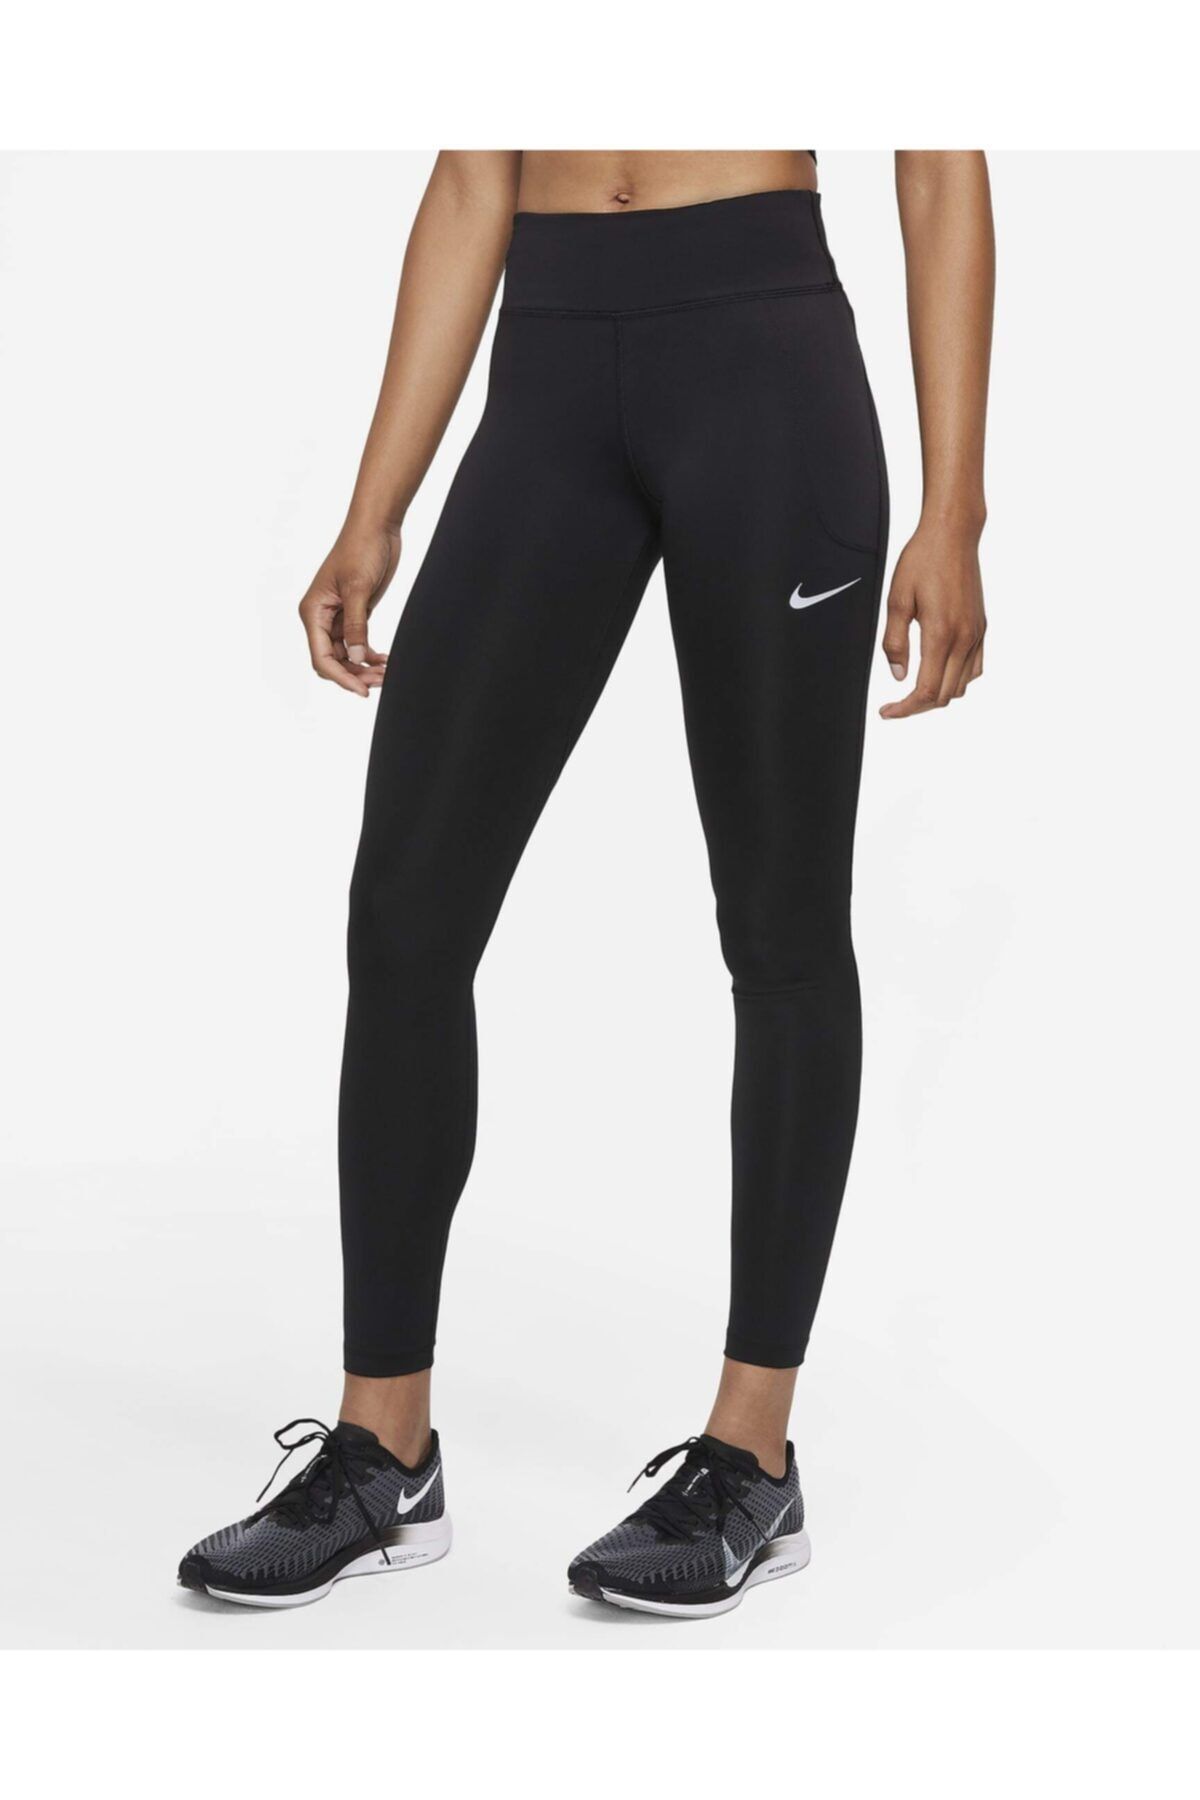 Nike Epic Faster Division Running Women's Tights - Black - Trendyol